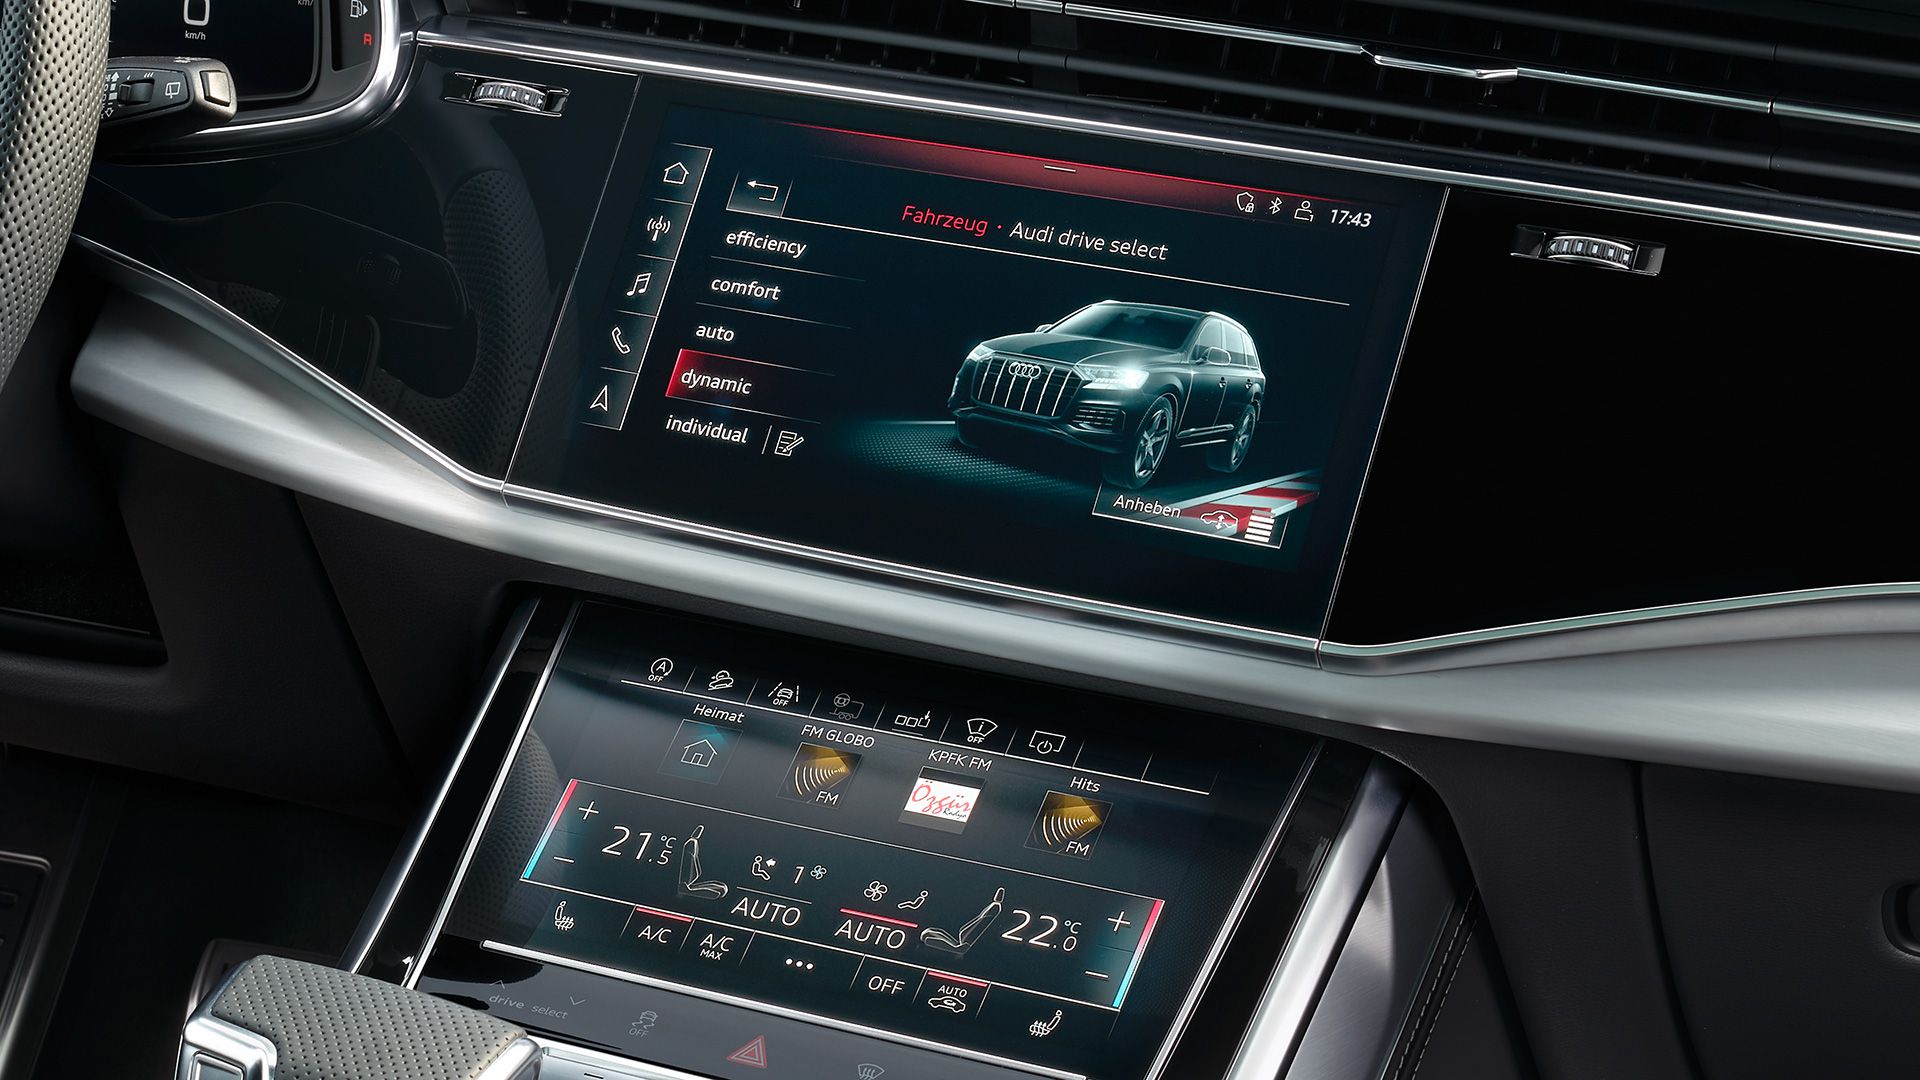 MMI Navigation plus i Audi connect